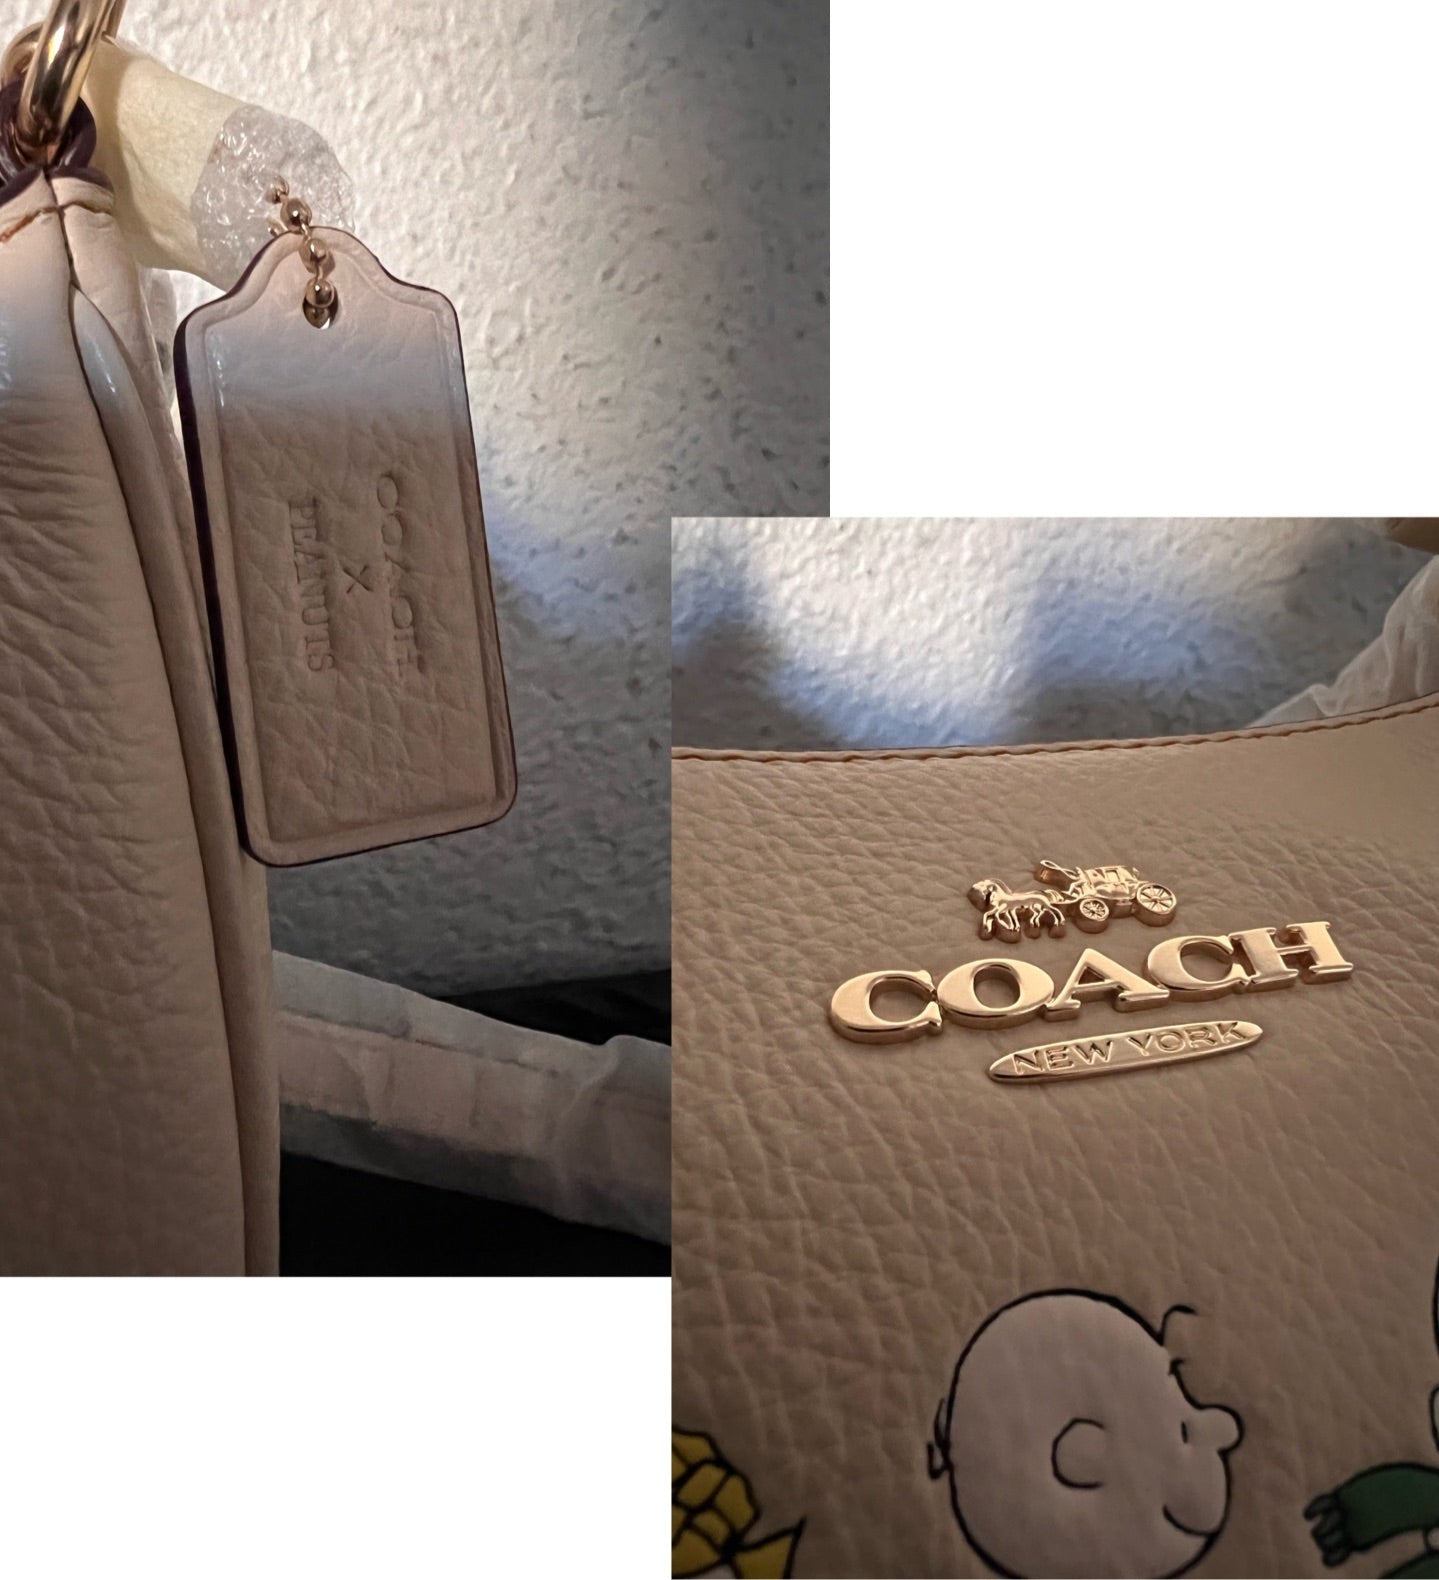 Authentic Coach X Peanuts Teri Shoulder Bag In Signature Canvas